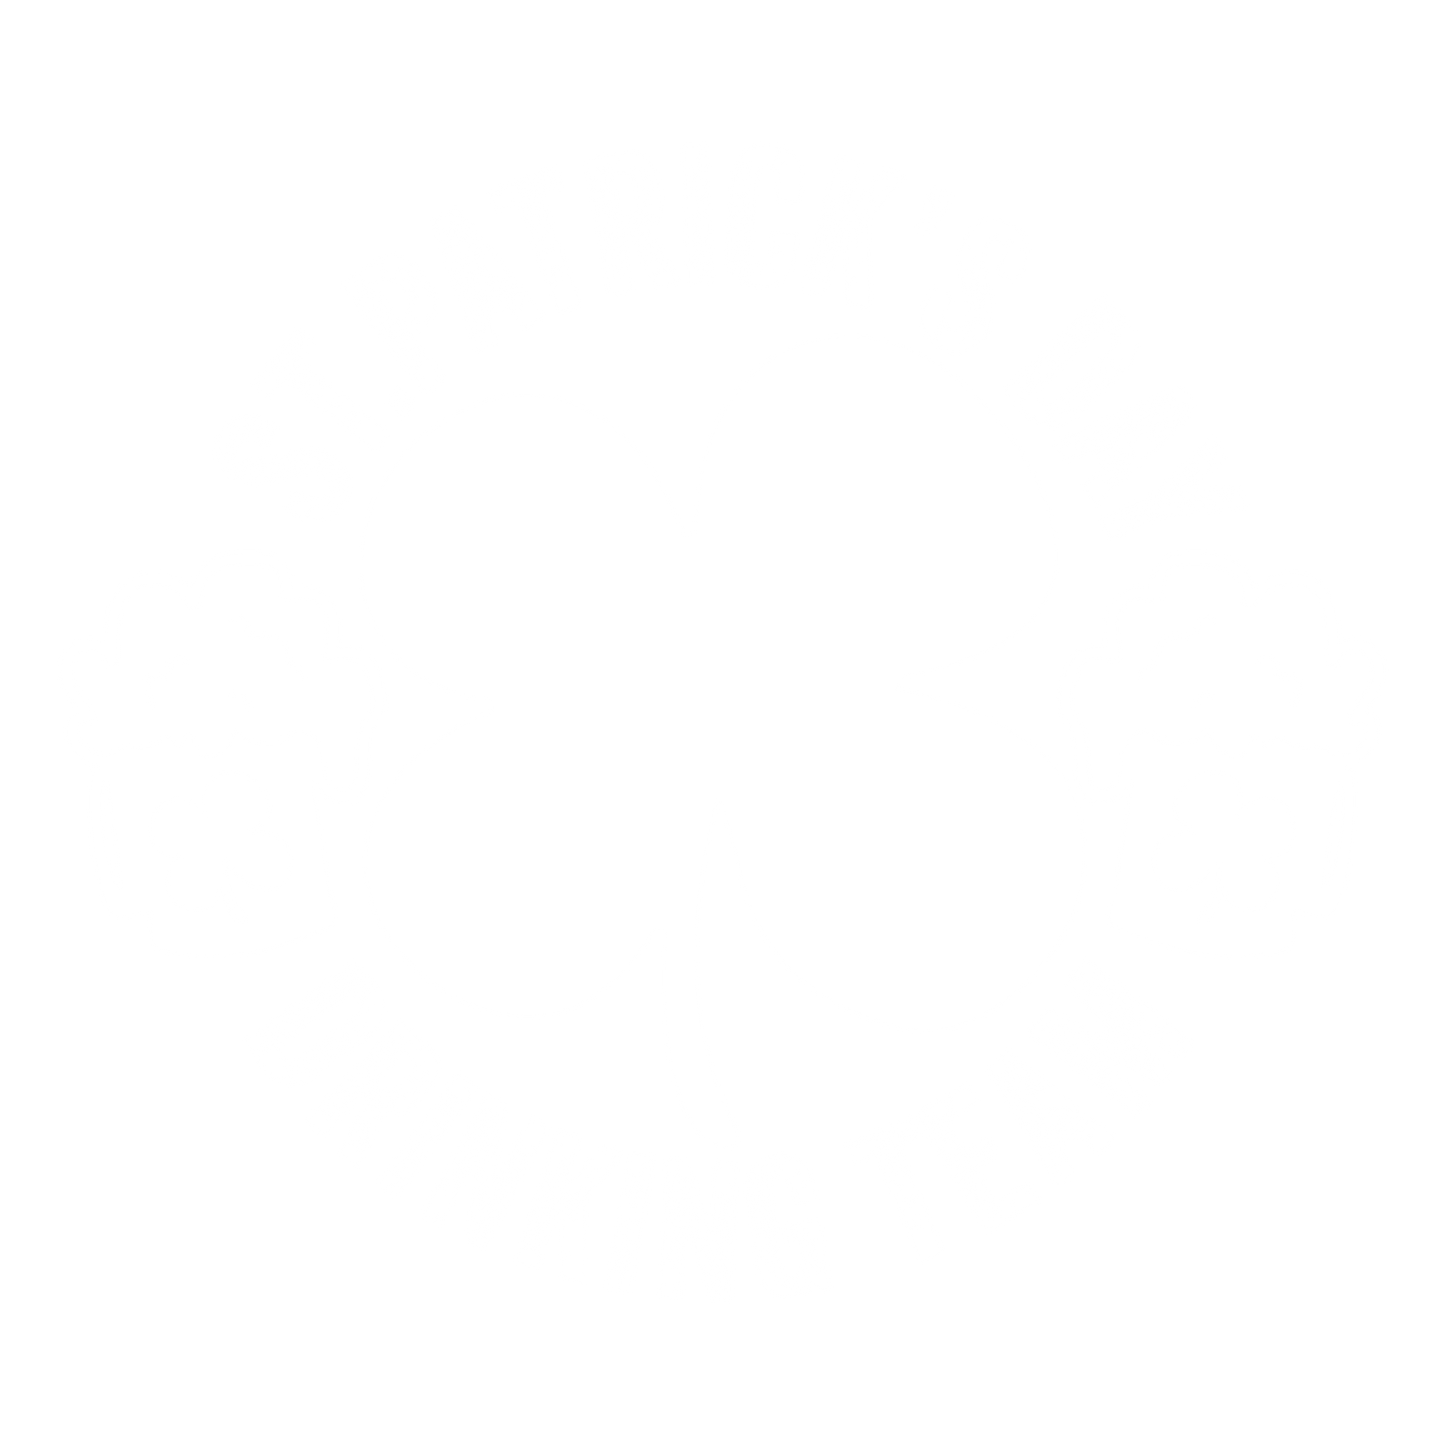 St. Patricks Day, Drinking Team Shirt